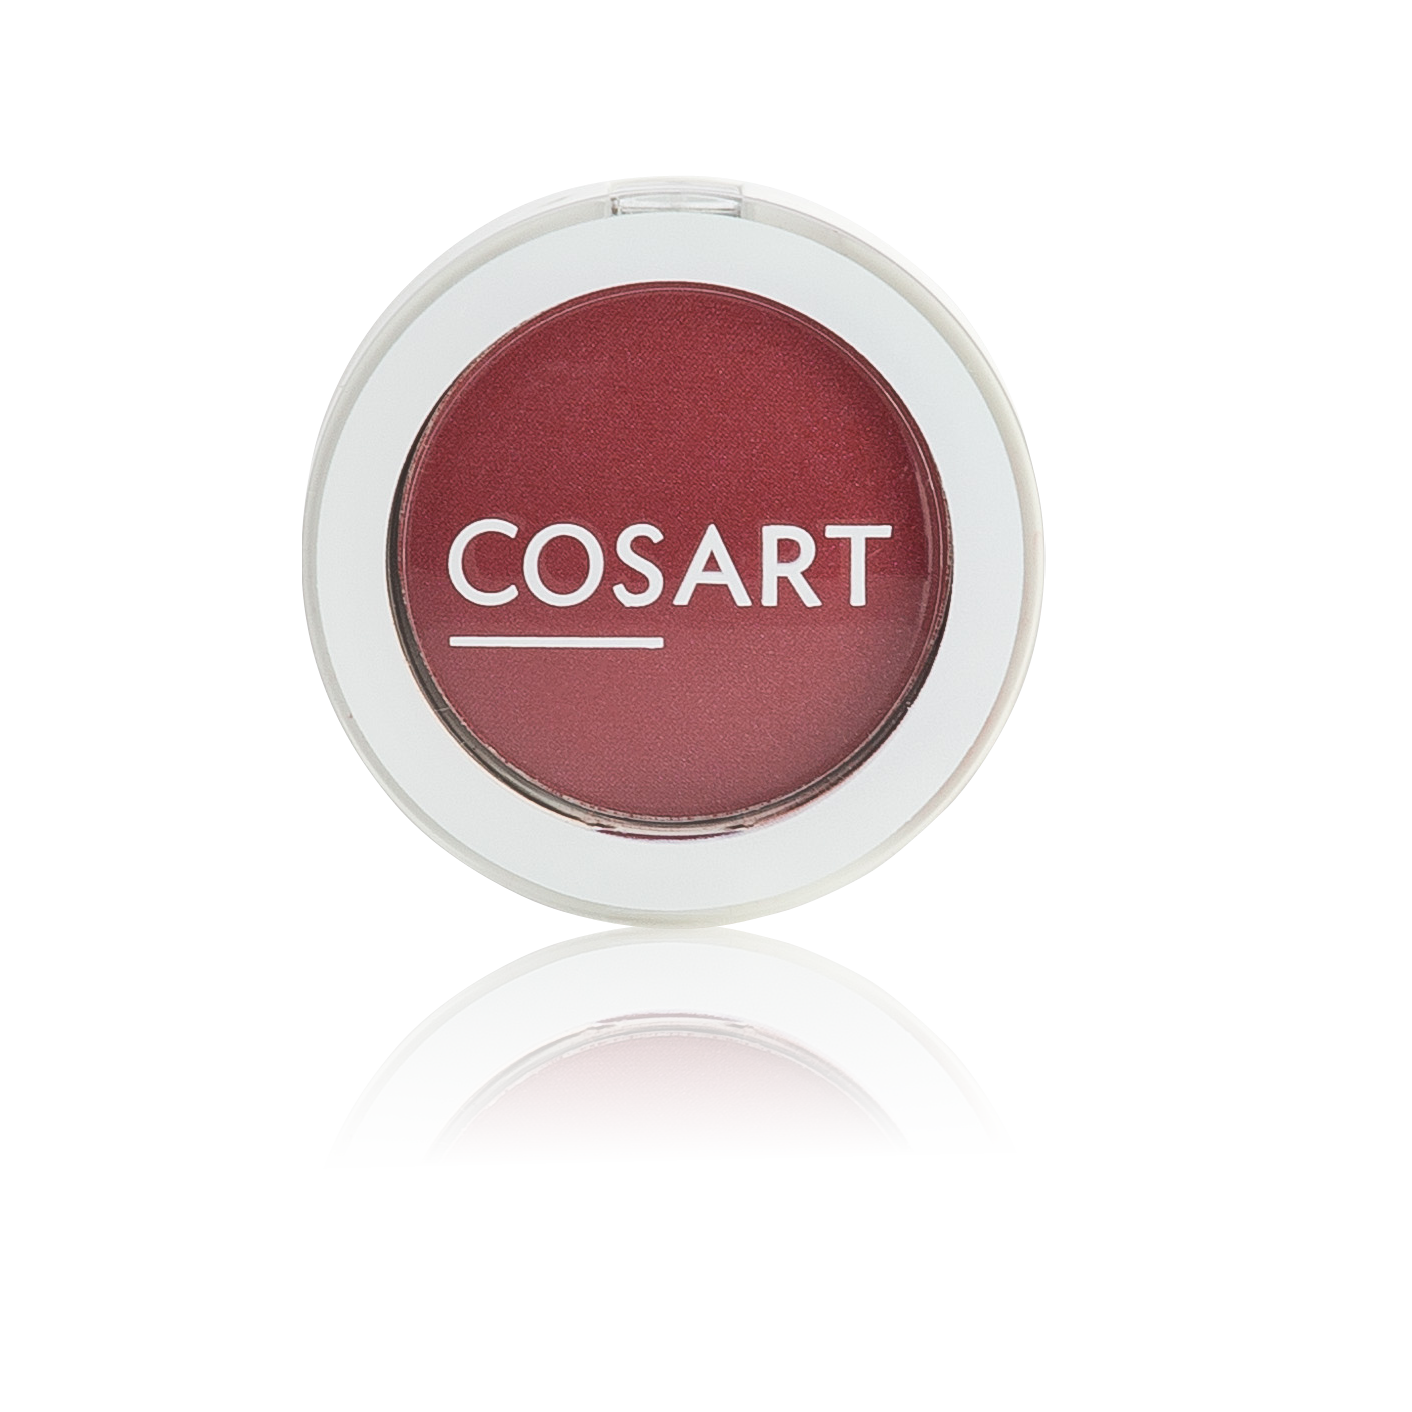 COSART Rouge mauve 706 5 g